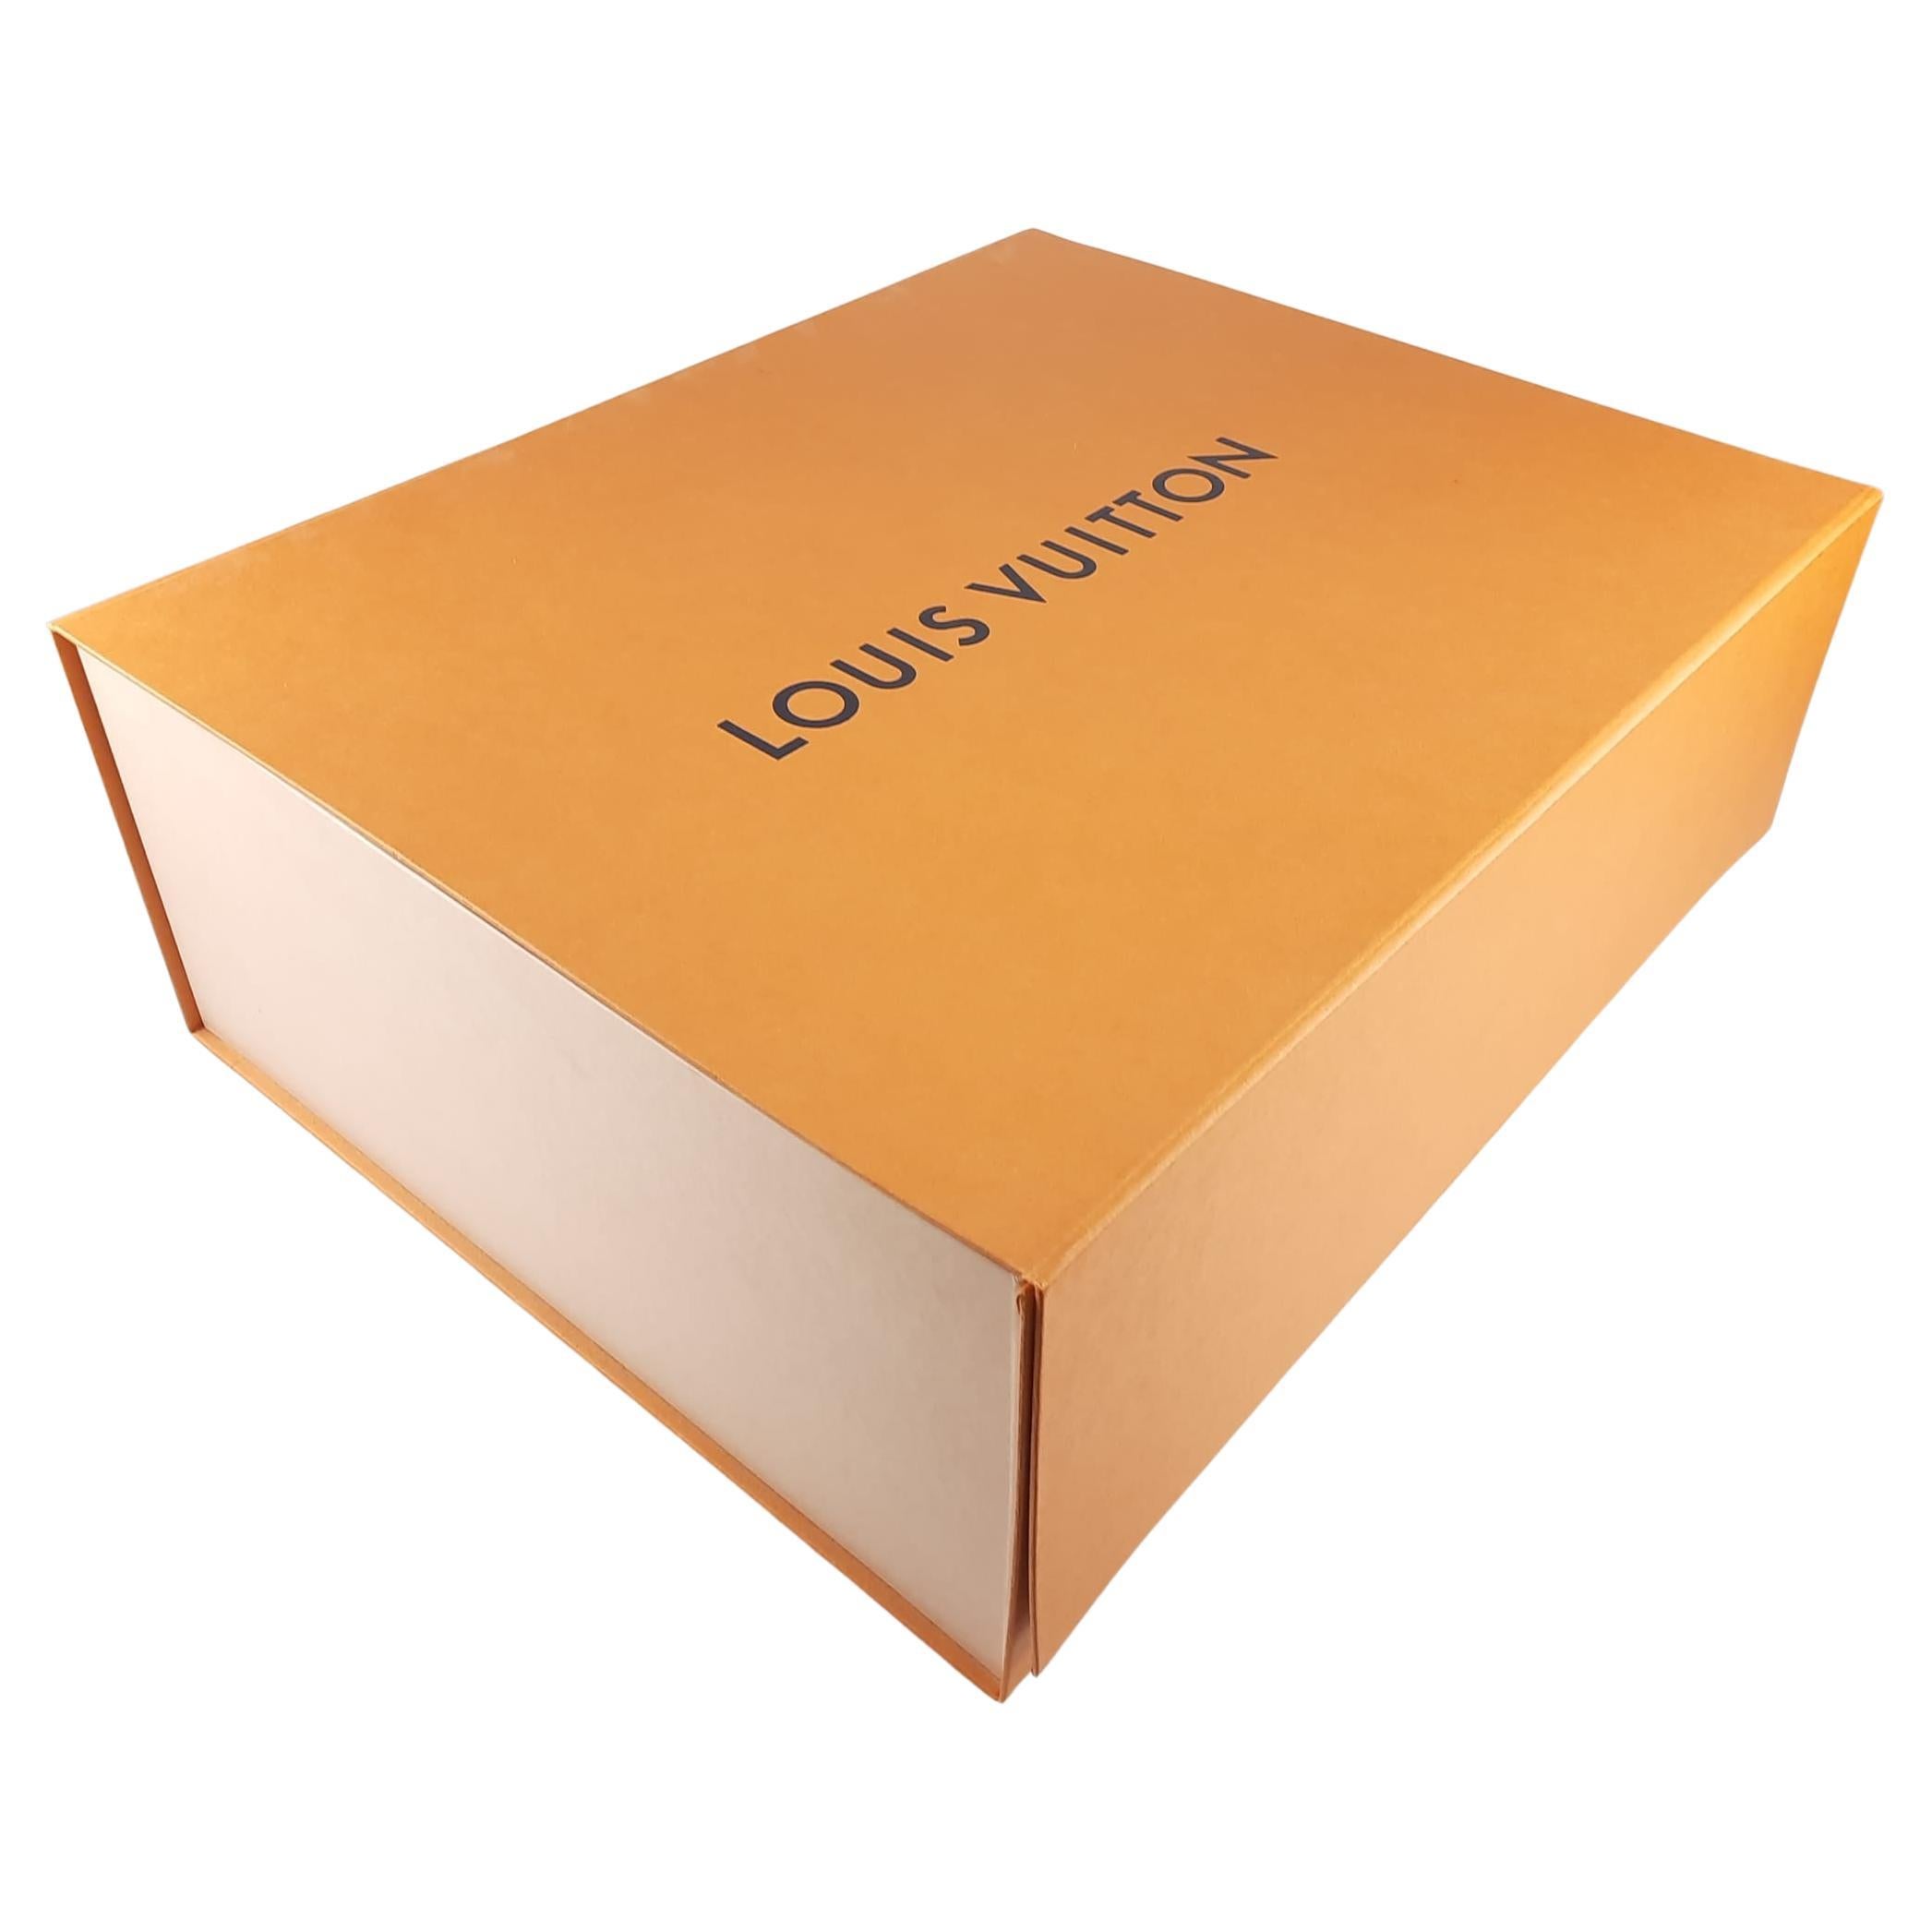 LV Louis Vuitton Blanket Coat Size 38 Mint at 1stDibs